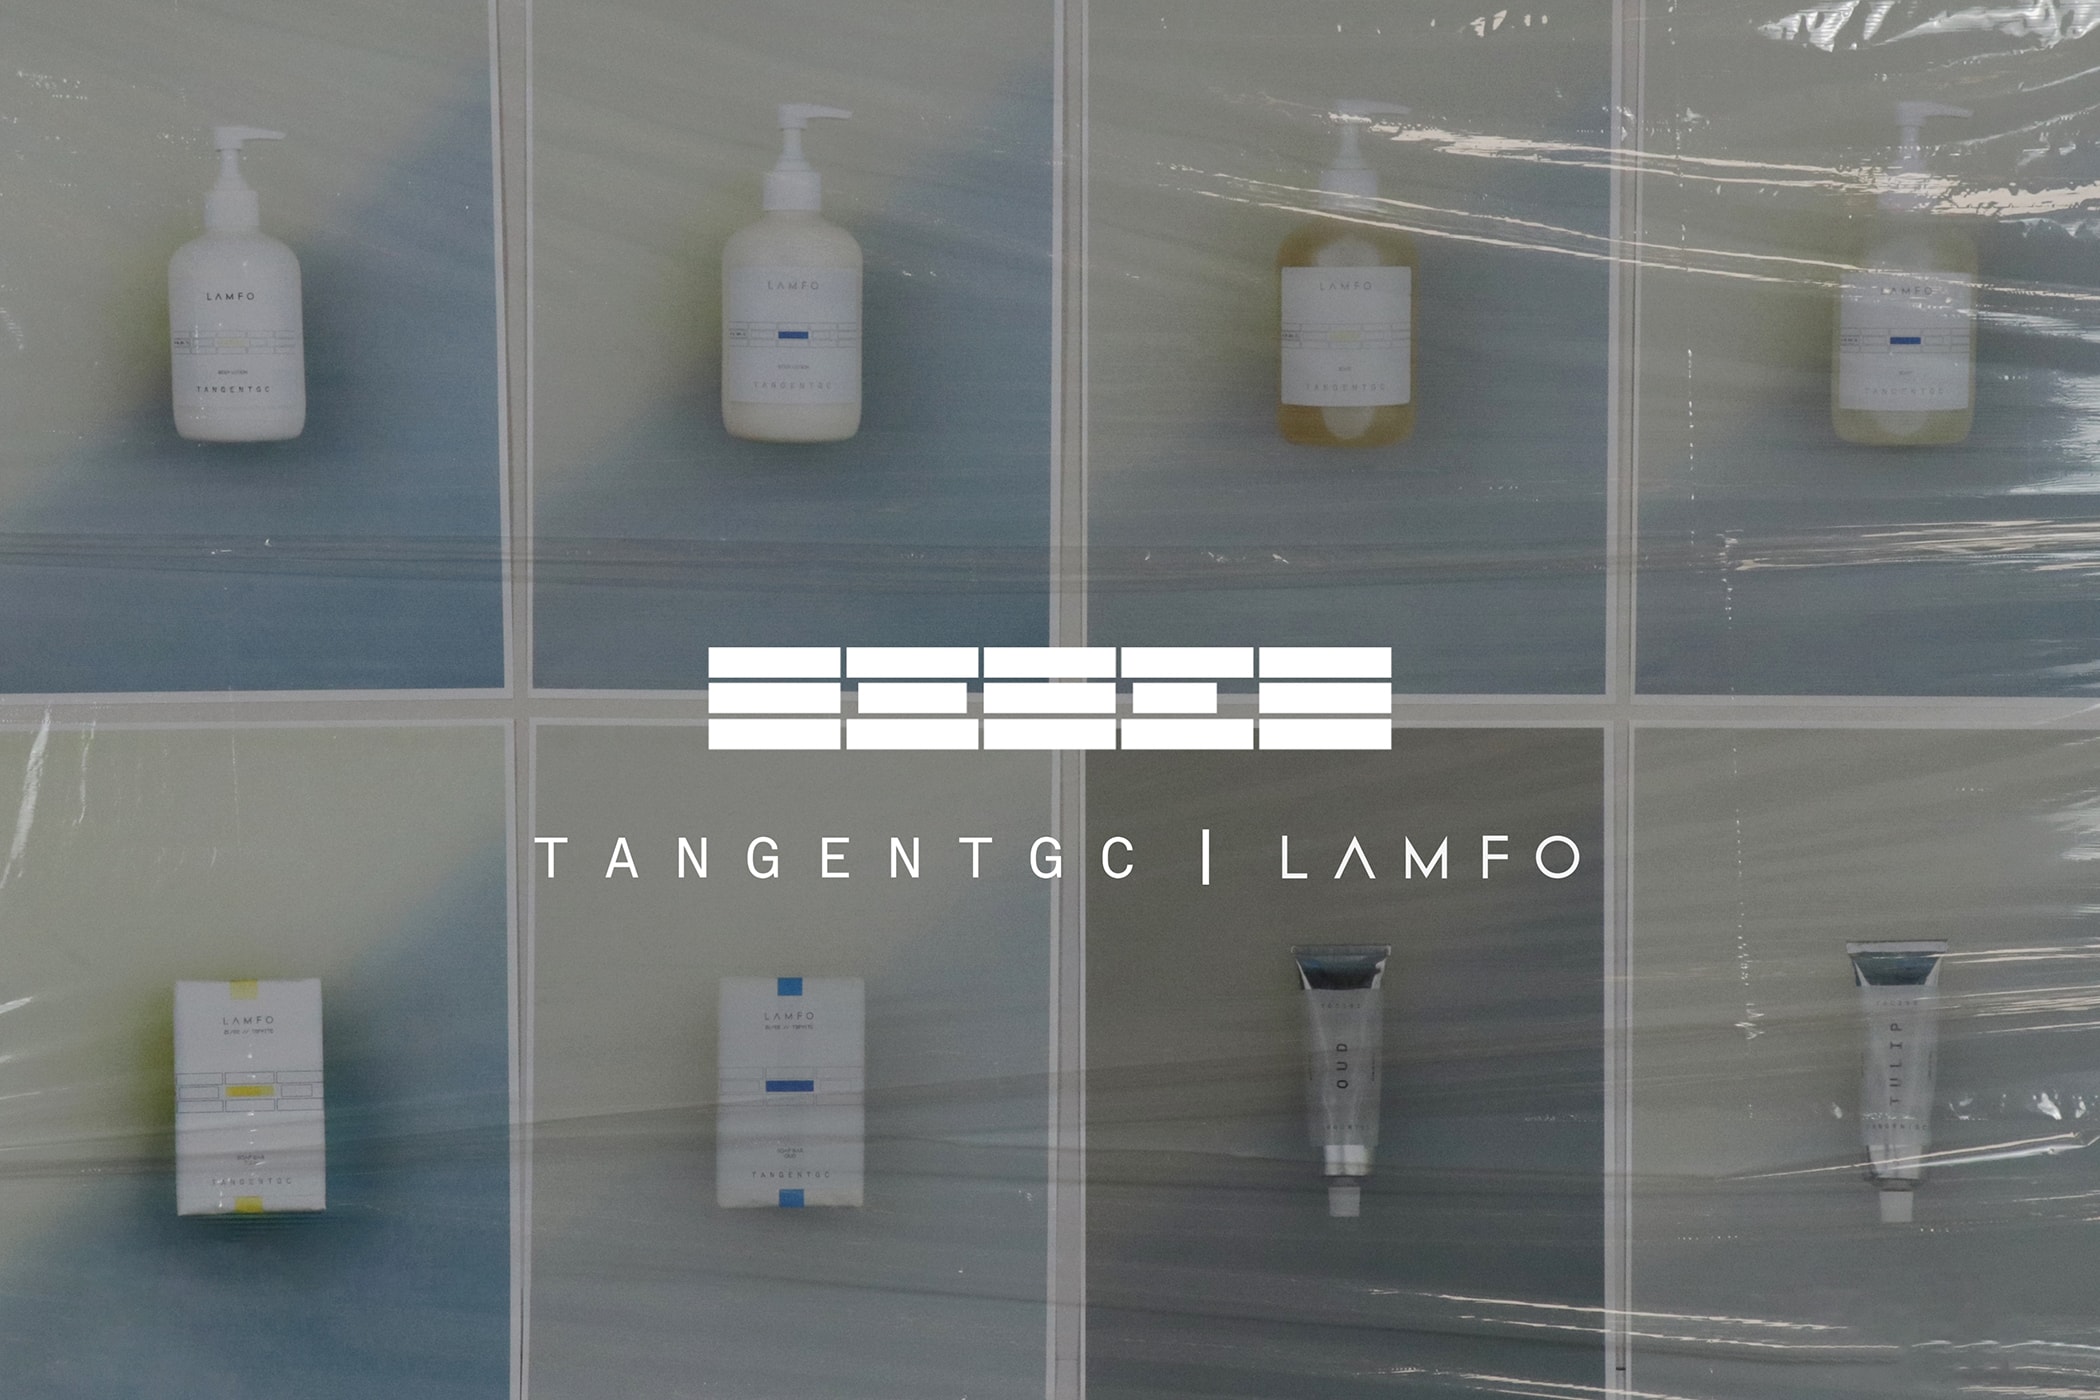 LAMFO 携手 TANGENTGC 打造洗护产品系列